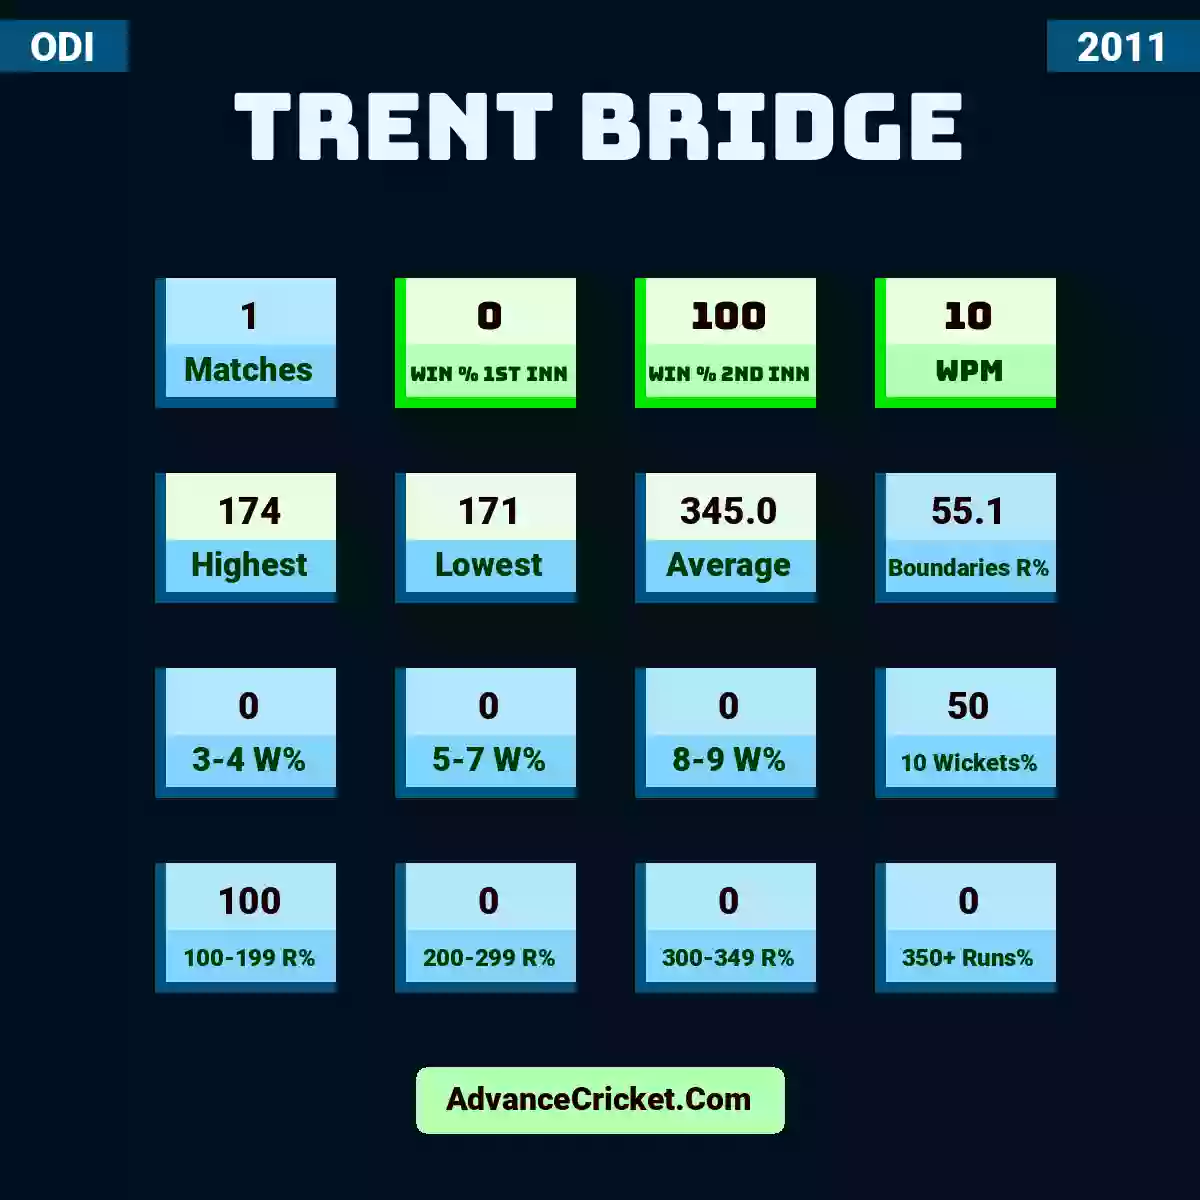 Image showing Trent Bridge with Matches: 1, Win % 1st Inn: 0, Win % 2nd Inn: 100, WPM: 10, Highest: 174, Lowest: 171, Average: 345.0, Boundaries R%: 55.1, 3-4 W%: 0, 5-7 W%: 0, 8-9 W%: 0, 10 Wickets%: 50, 100-199 R%: 100, 200-299 R%: 0, 300-349 R%: 0, 350+ Runs%: 0.